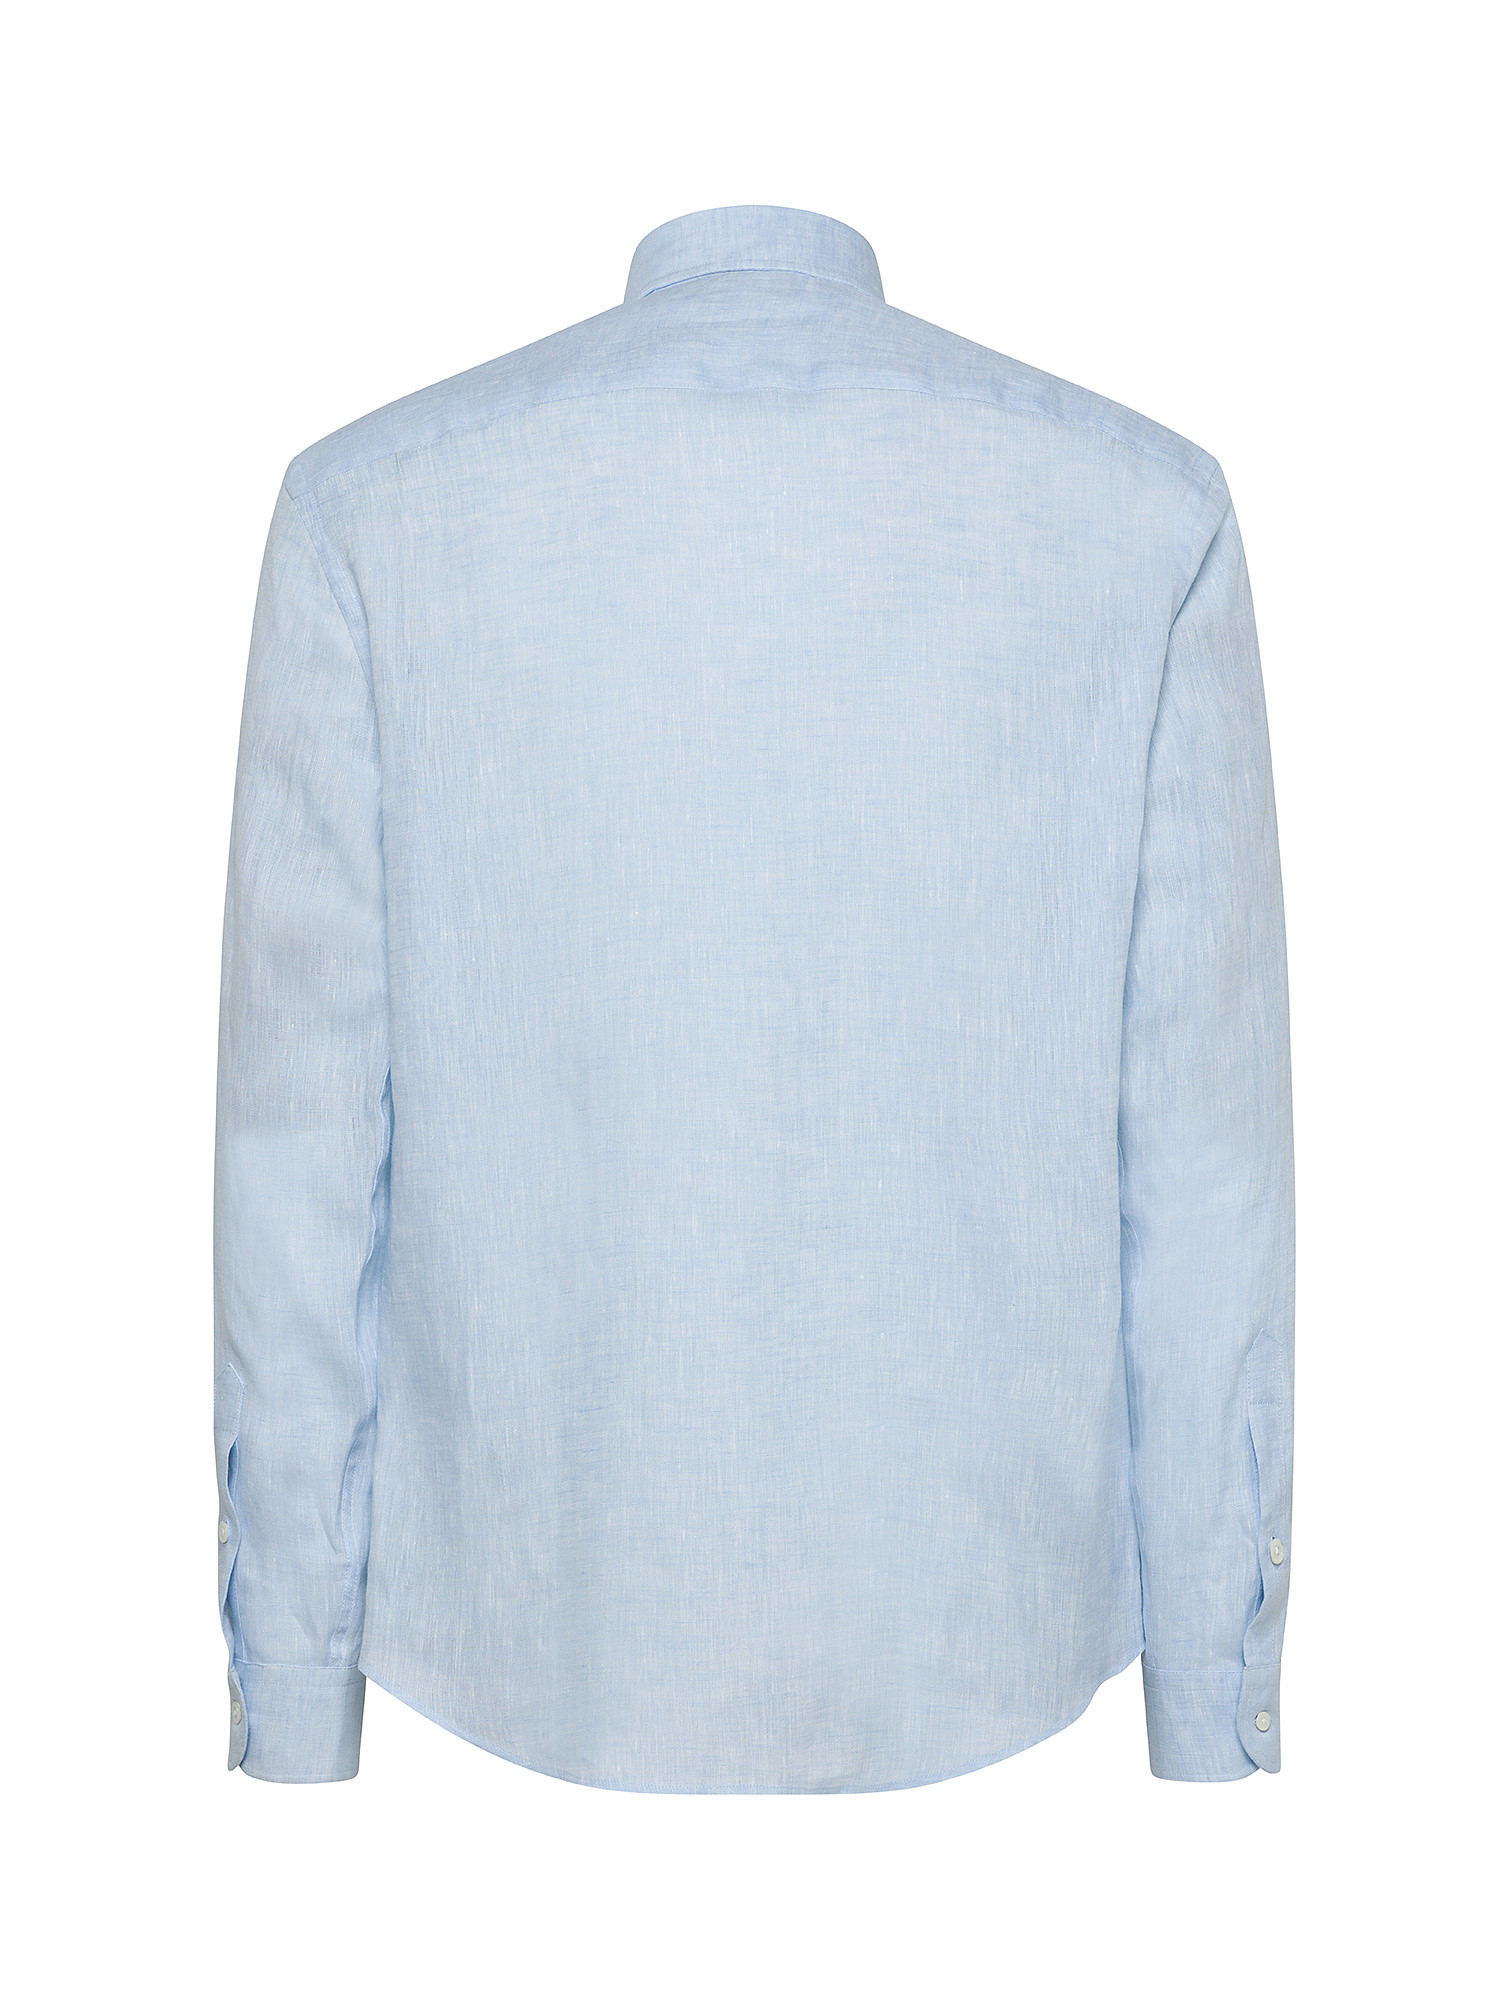 Emporio Armani - Camicia relaxed fit in puro lino, Azzurro, large image number 2